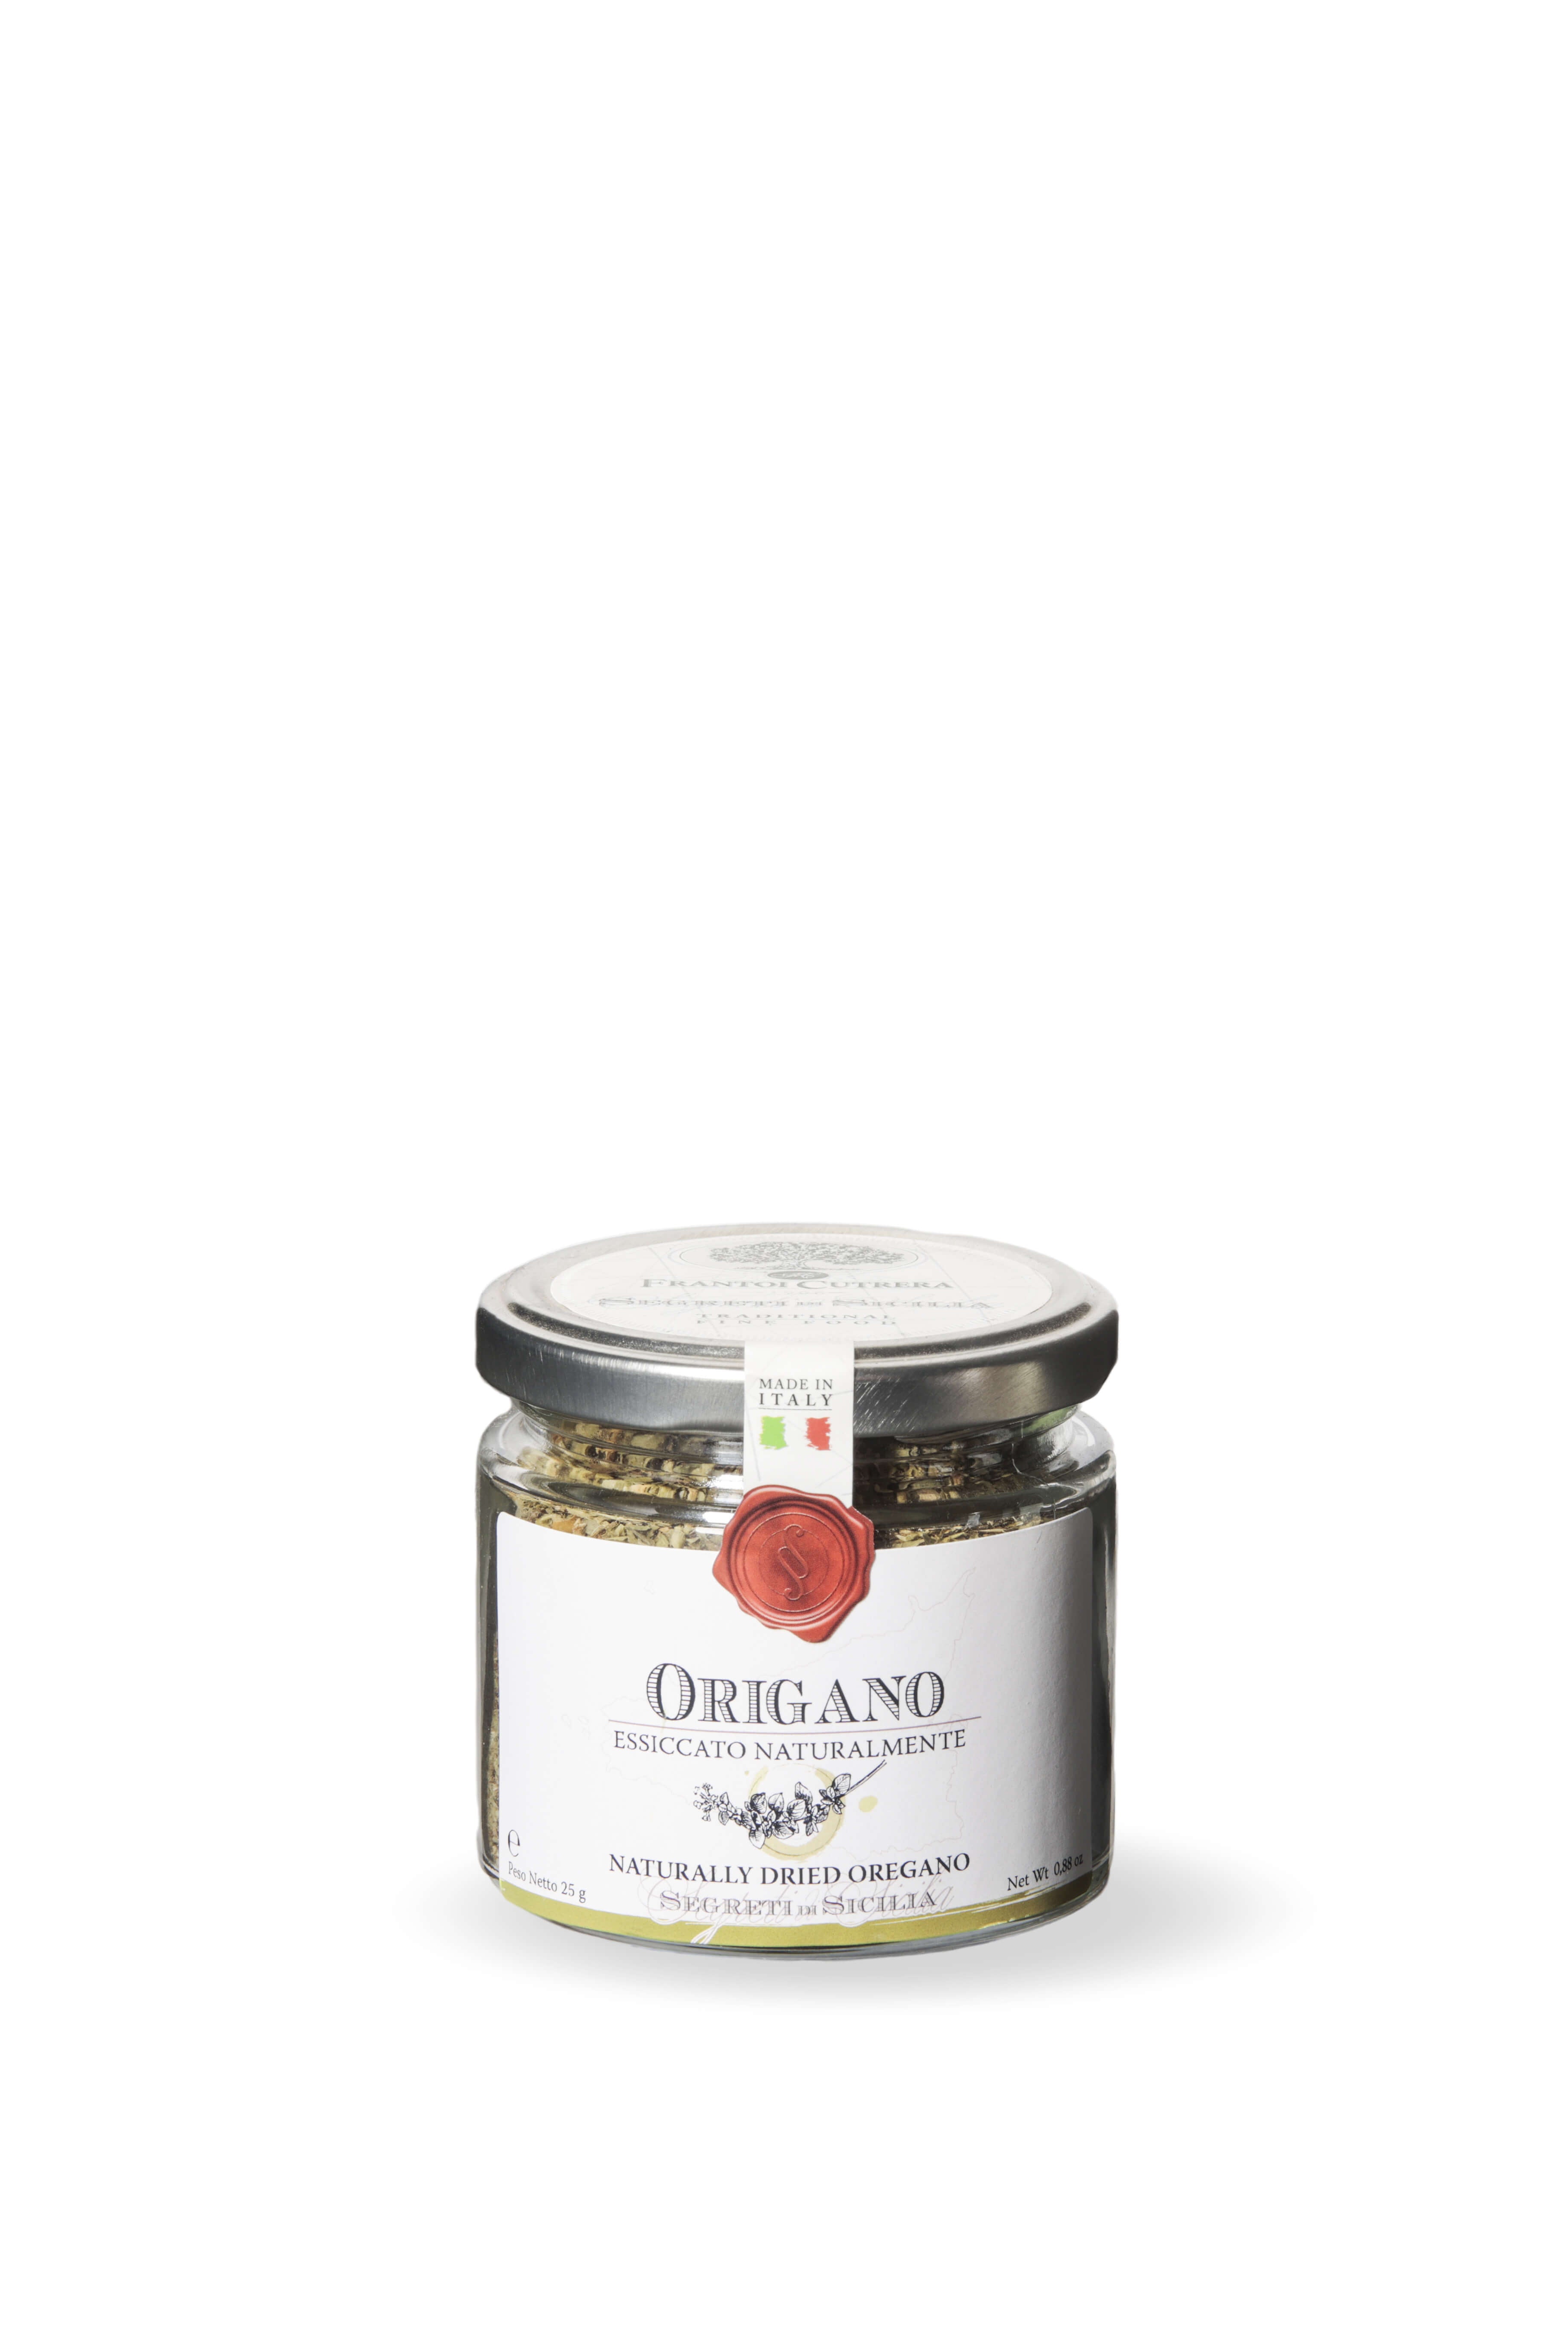 Naturally dried oregano – Secrets of Sicily